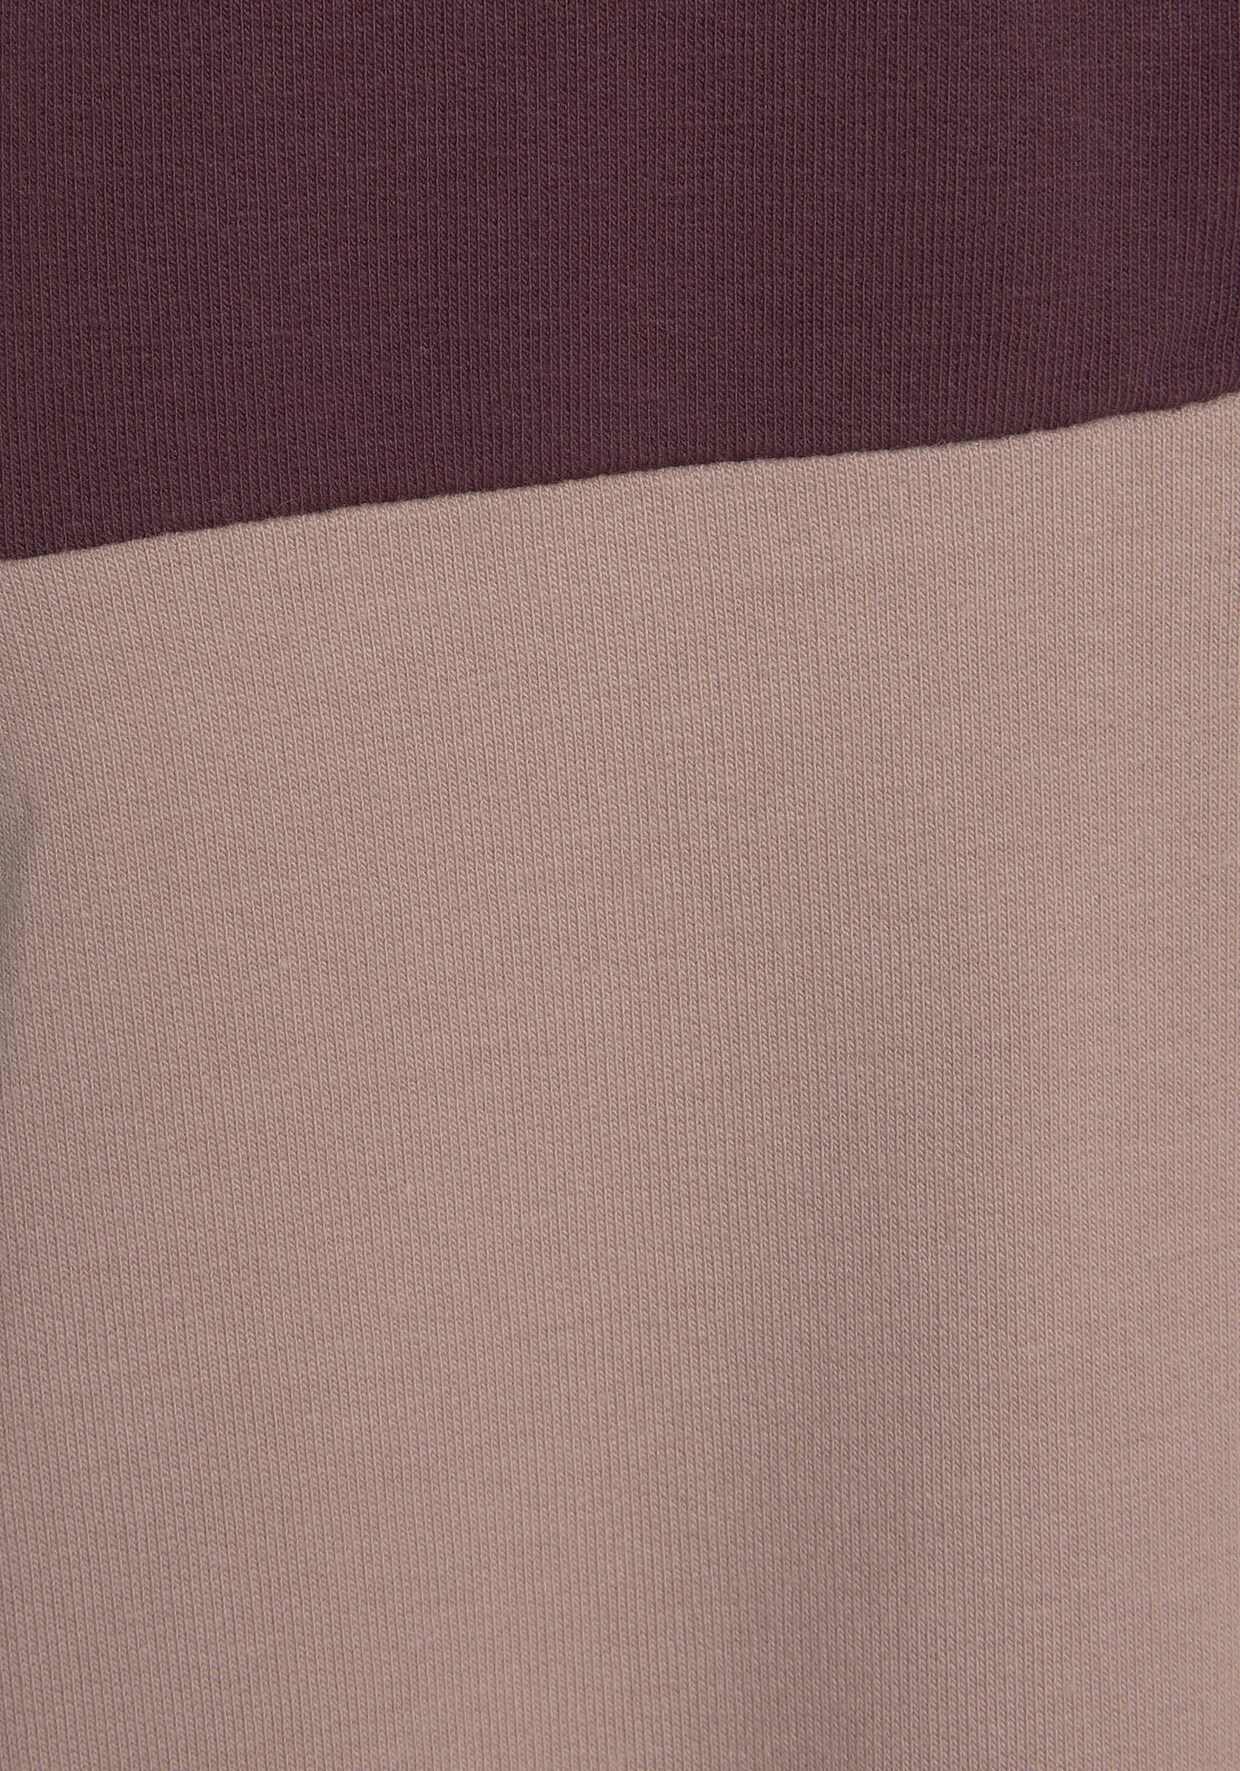 Bench. Sweatshirt - bordeaux-rose-creme